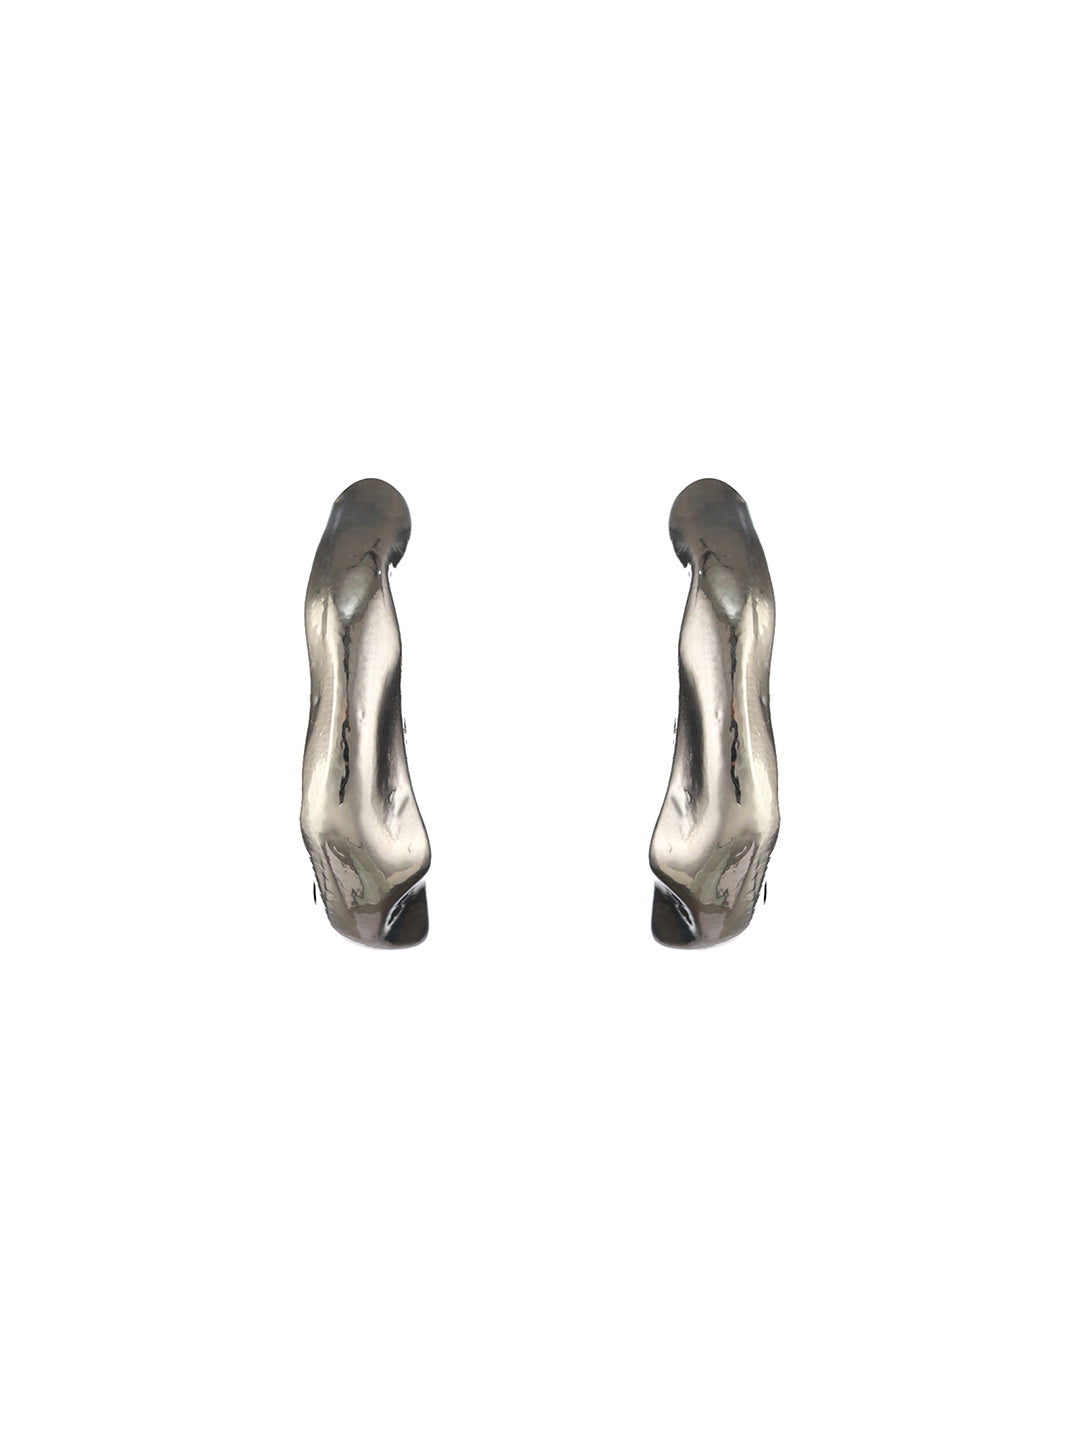 Contemporary Silver-Plated Half-Hoop Earrings